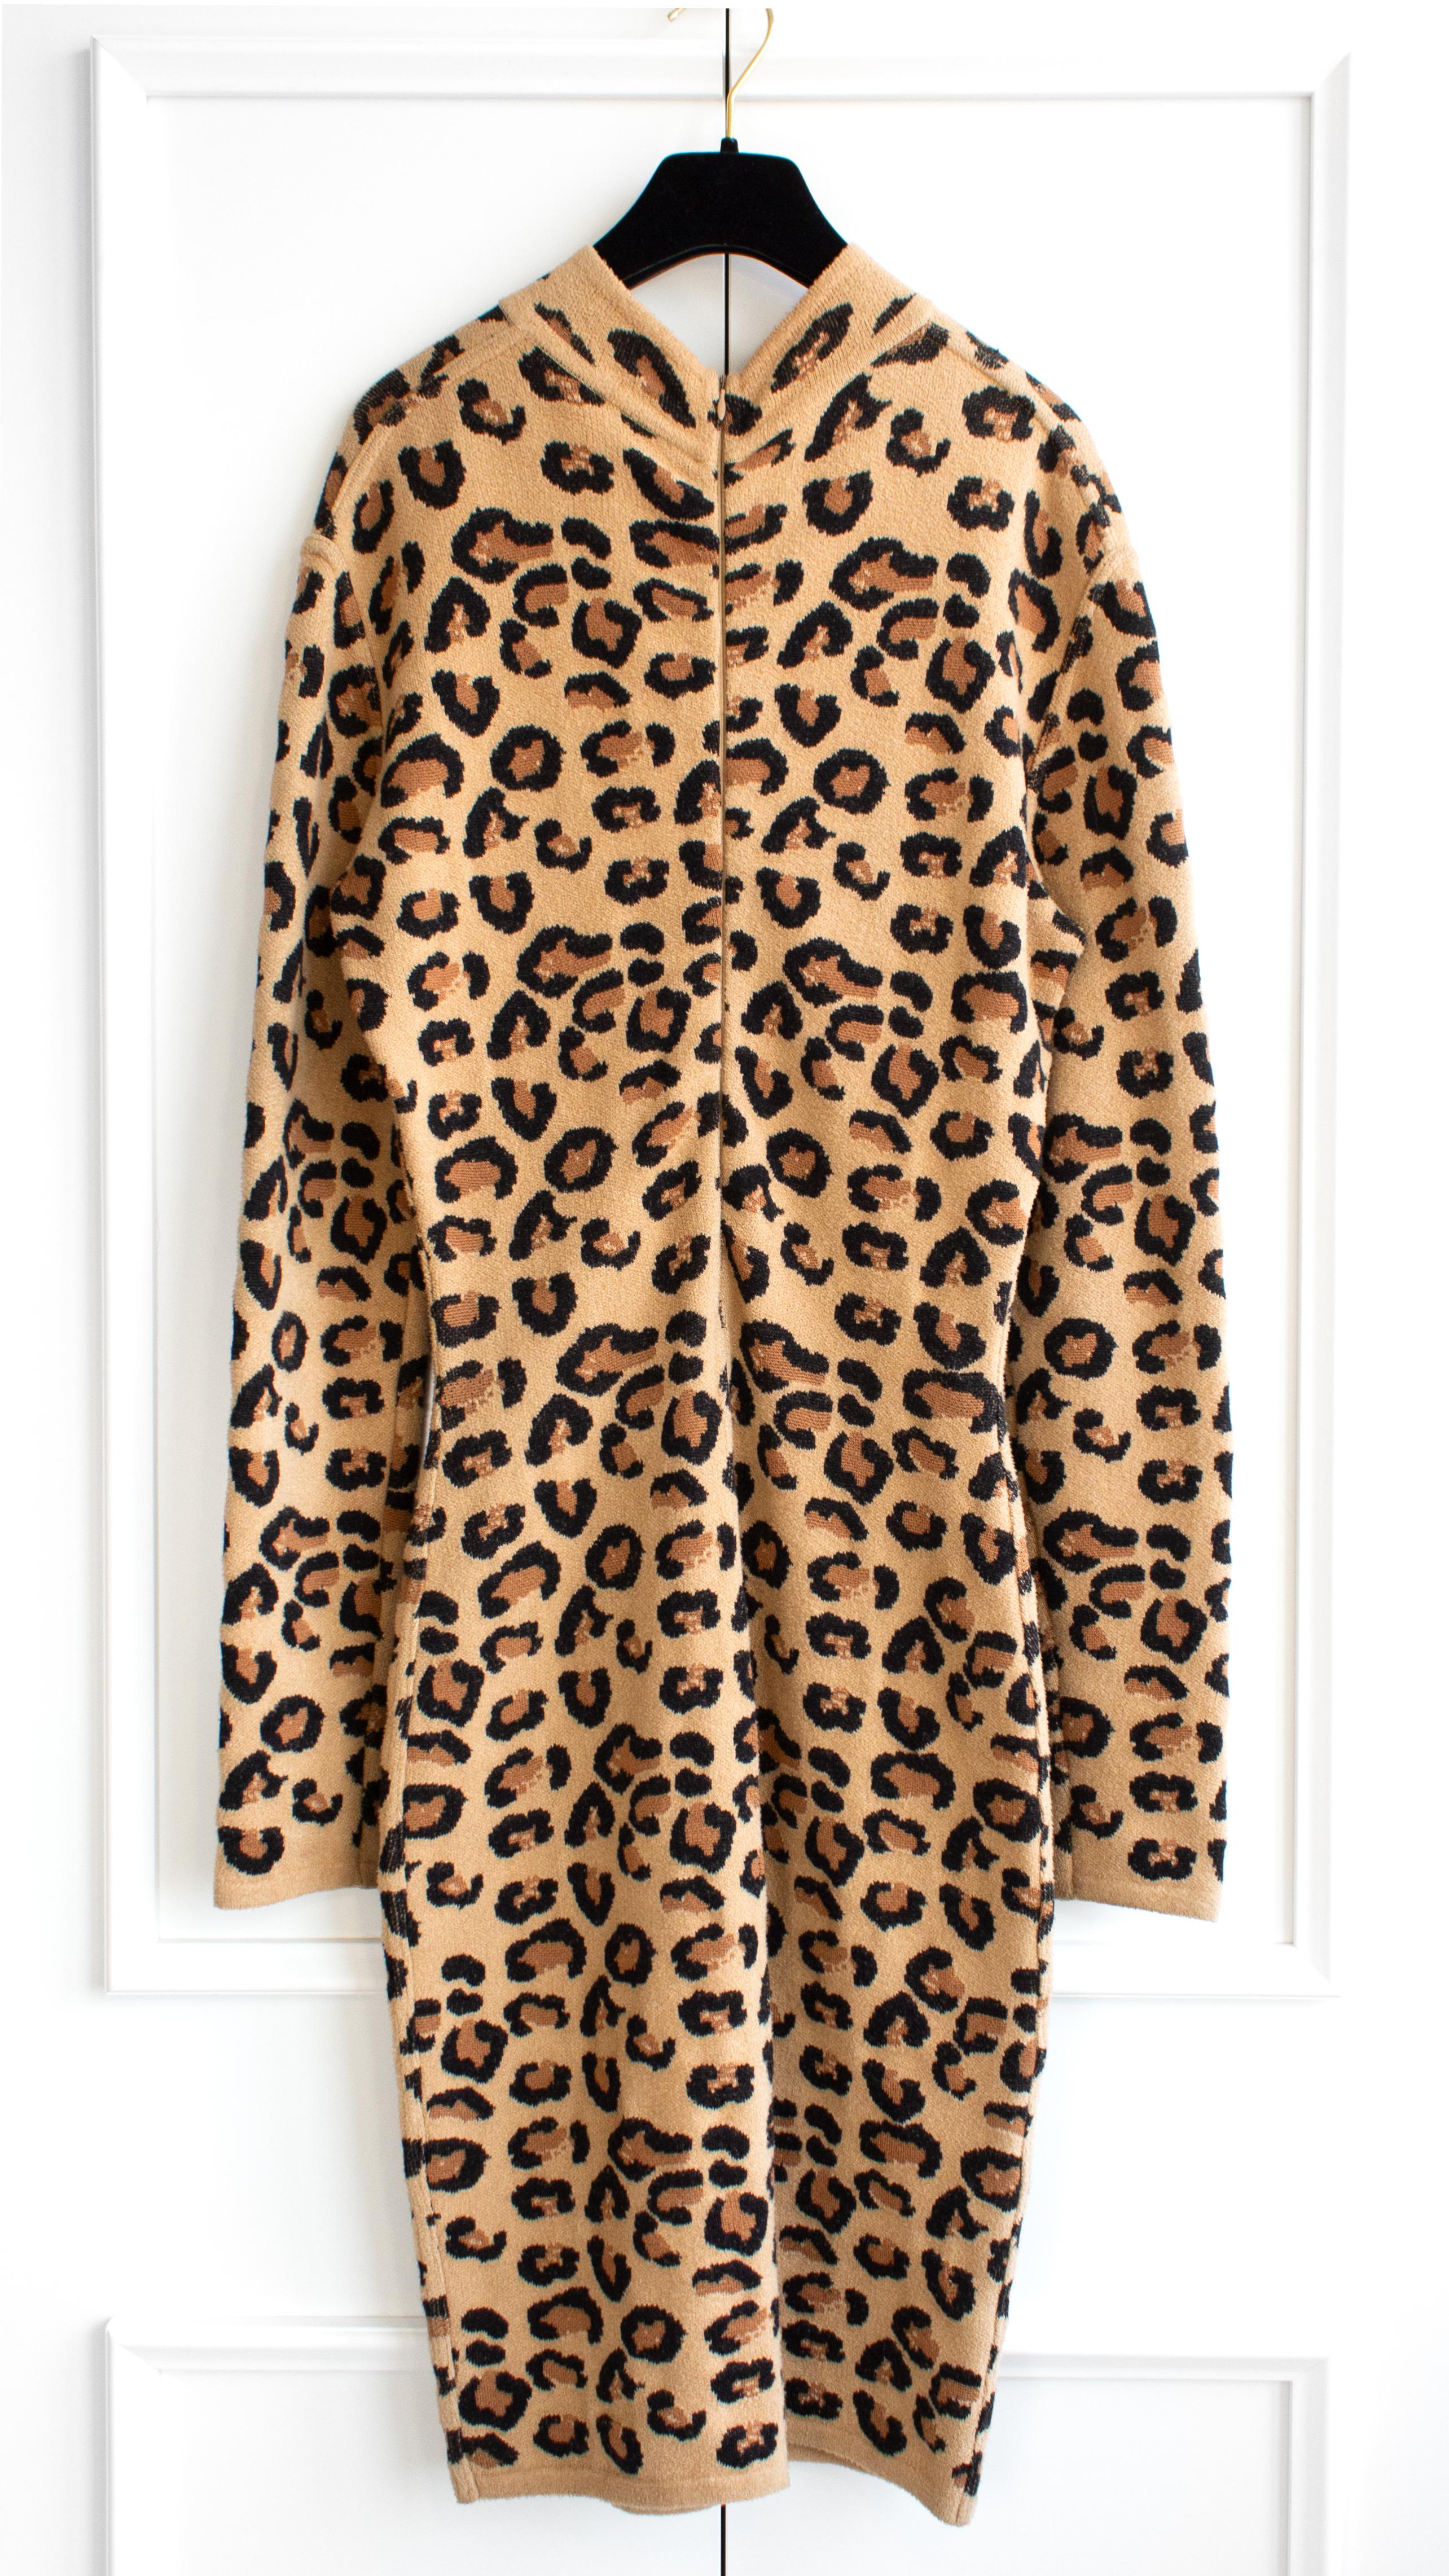 Iconic Alaia Vintage Fall/Winter 1991 Leopard Print Knit Bodycon Dress 6